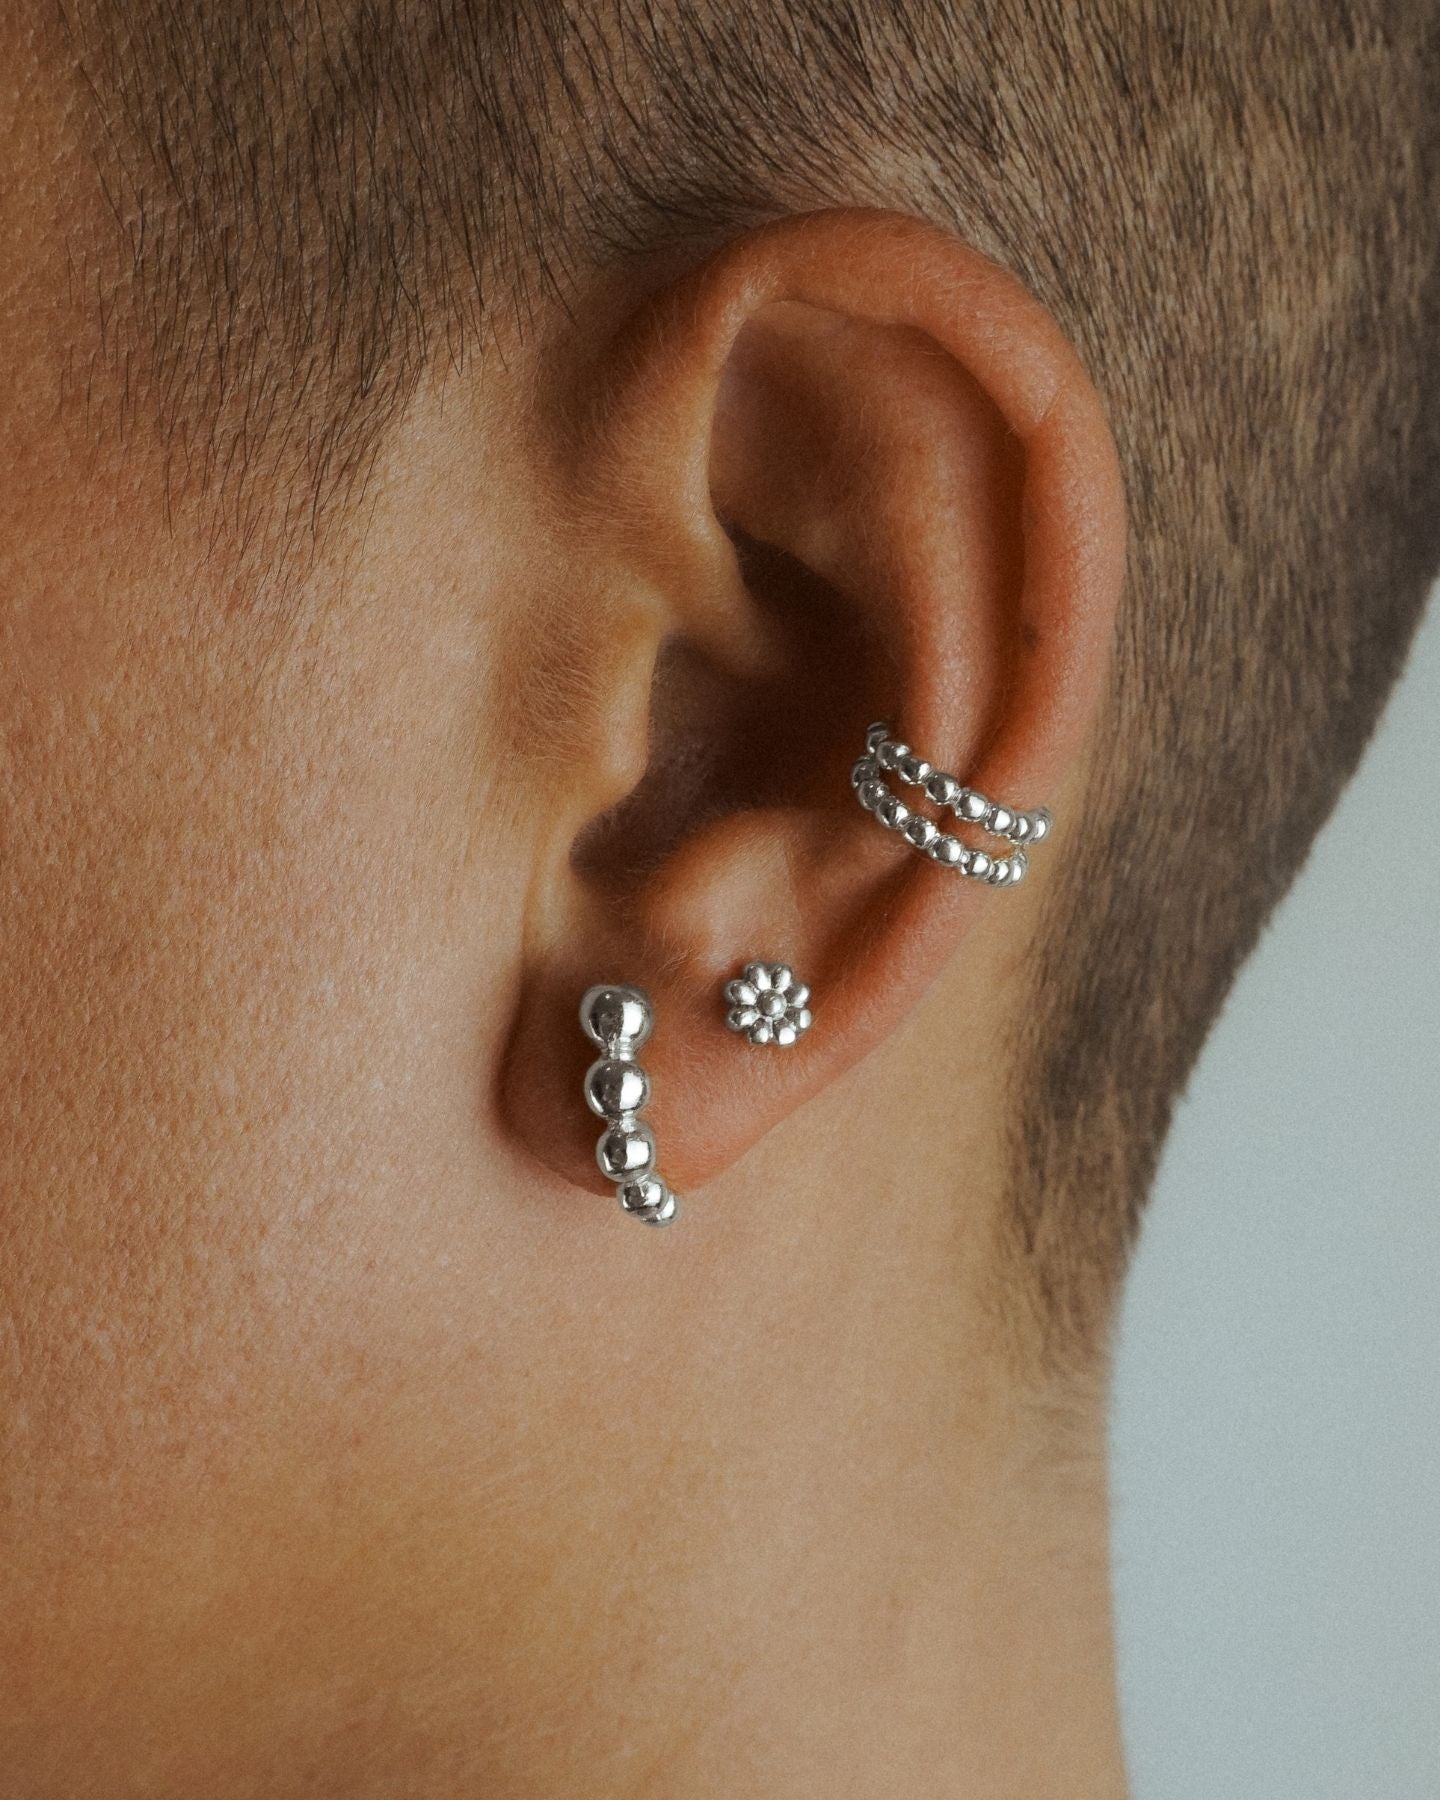 Brilliant Beads Ear Stud Silver